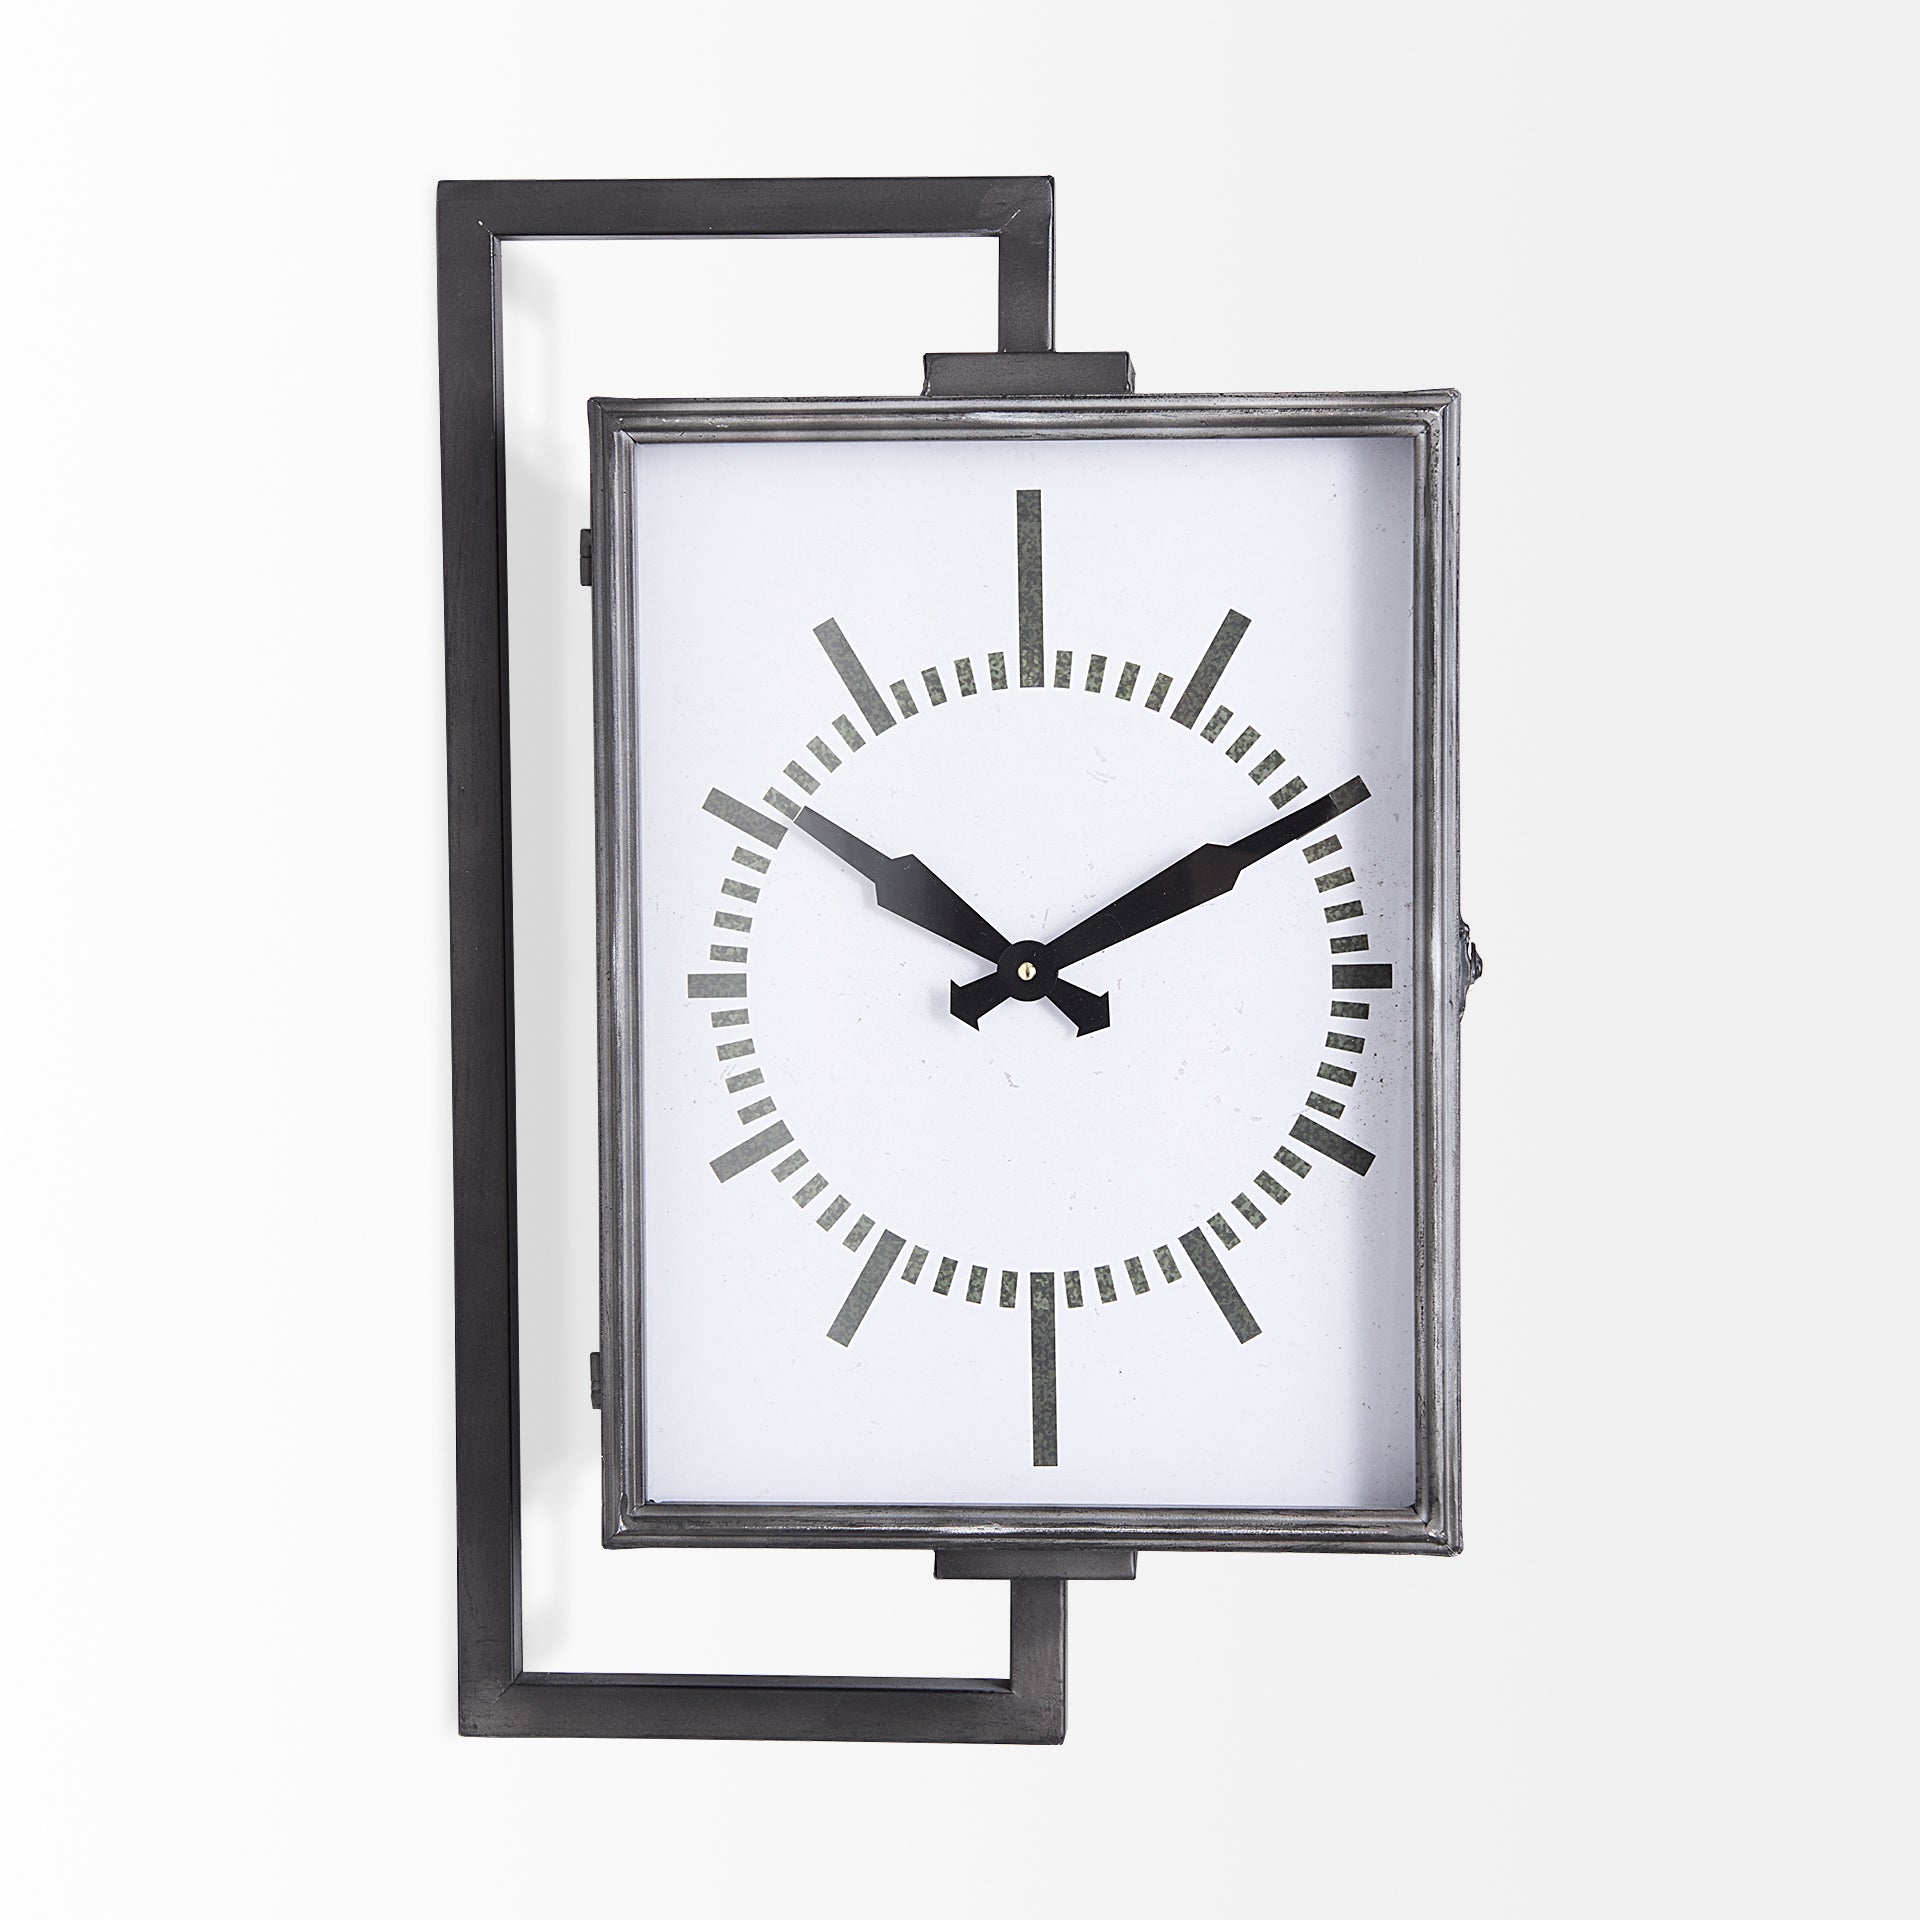 Hagar Industrial Wall Clock